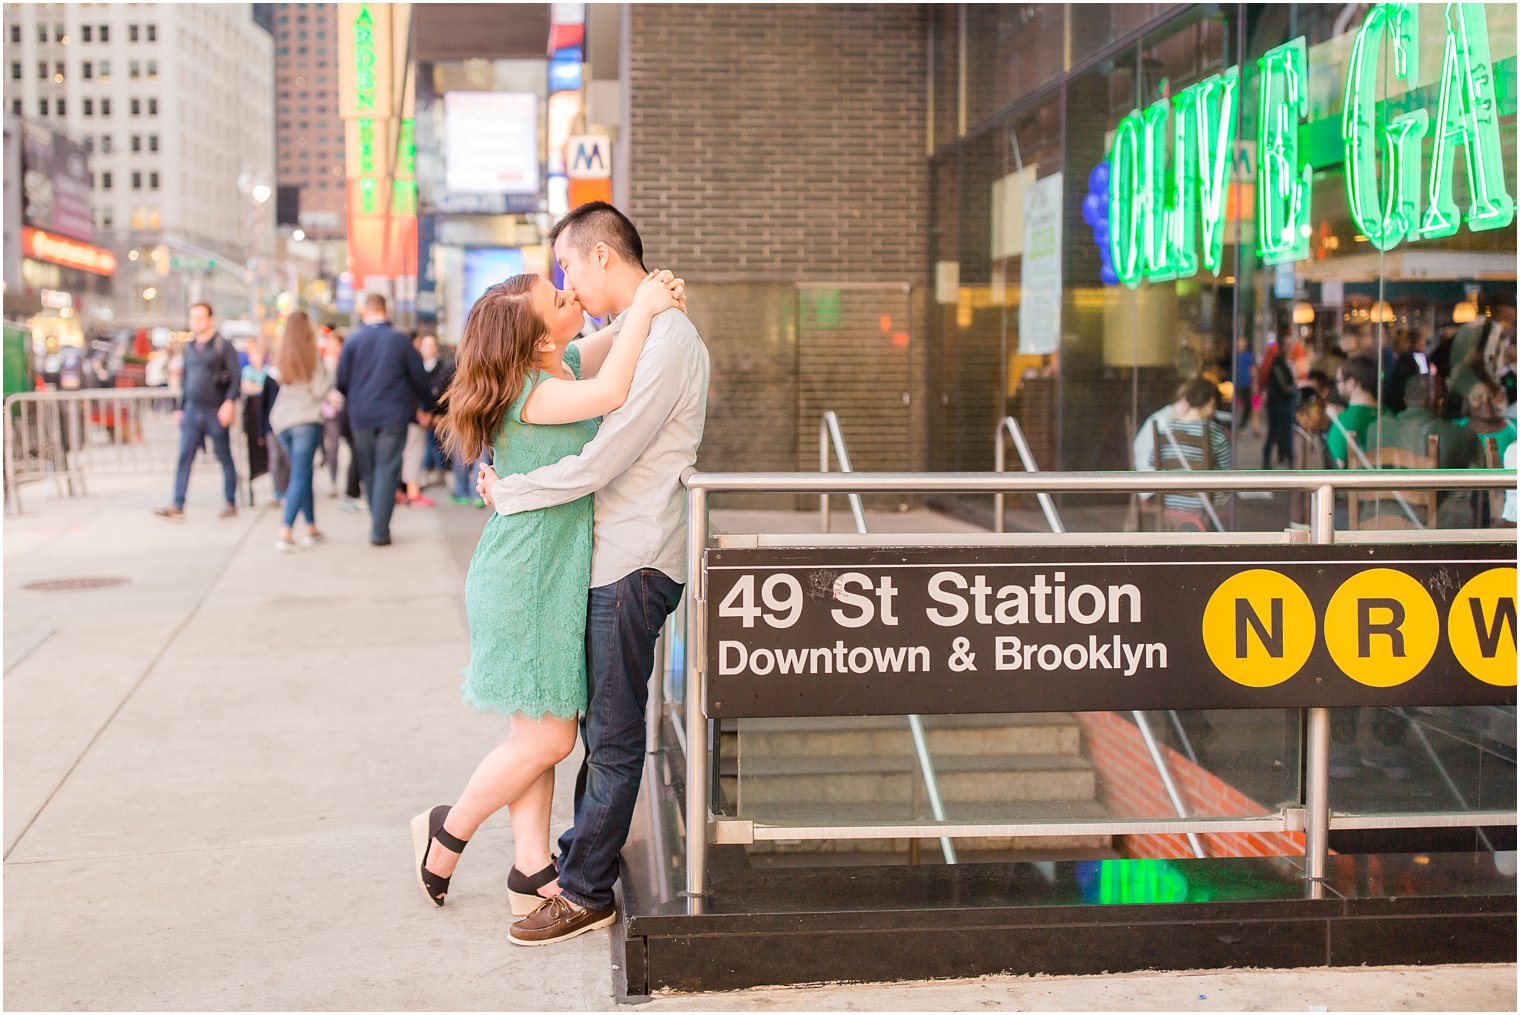 Engagement photo in NYC subway by Idalia Photography